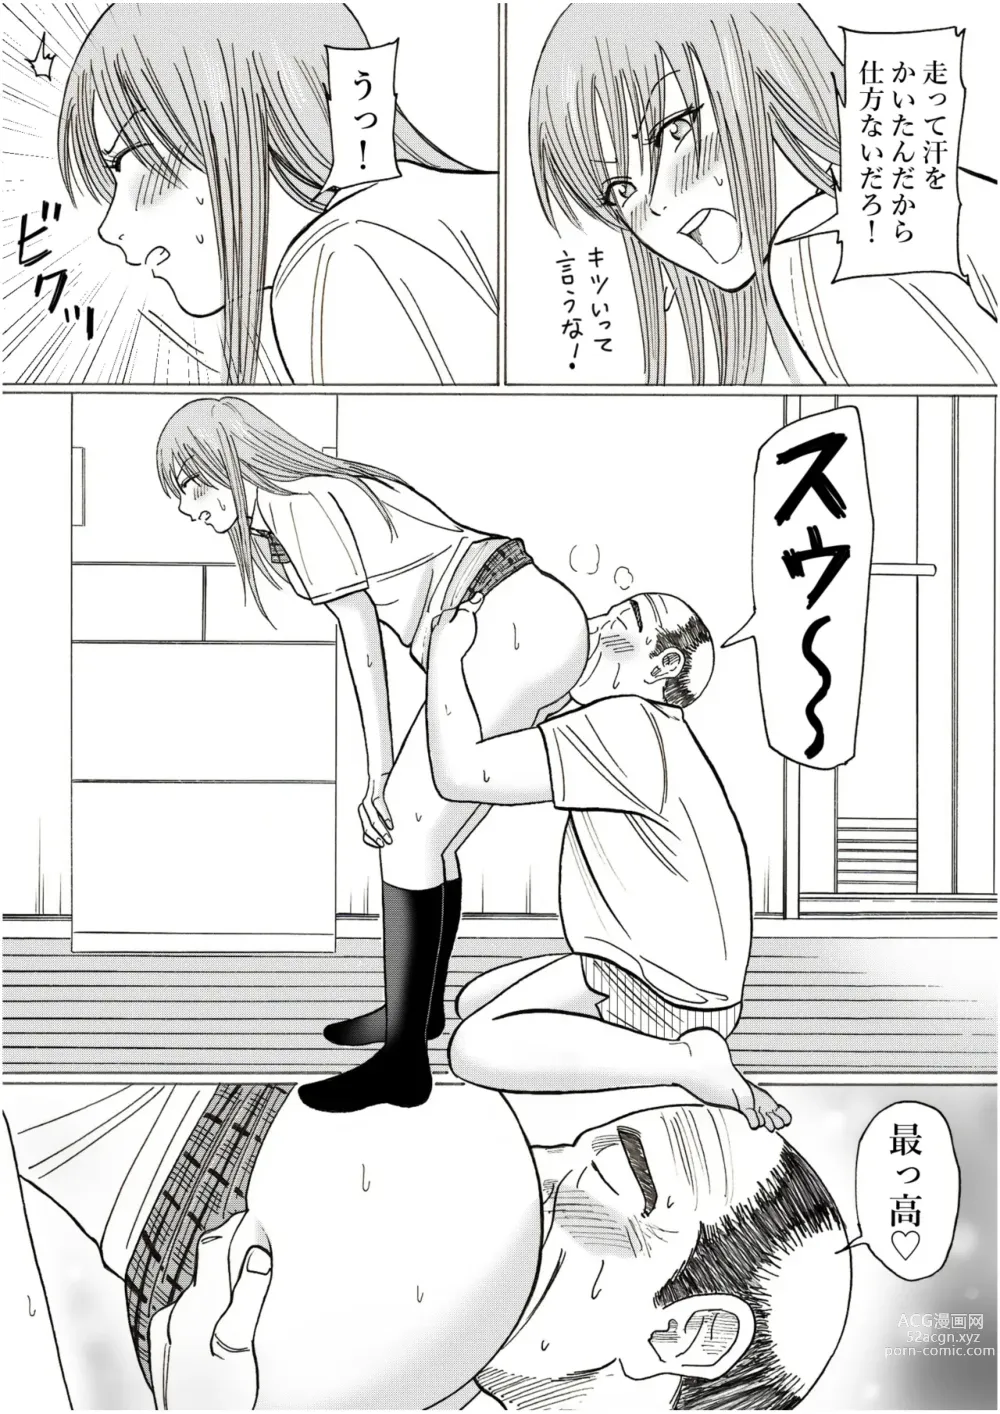 Page 19 of doujinshi Risato